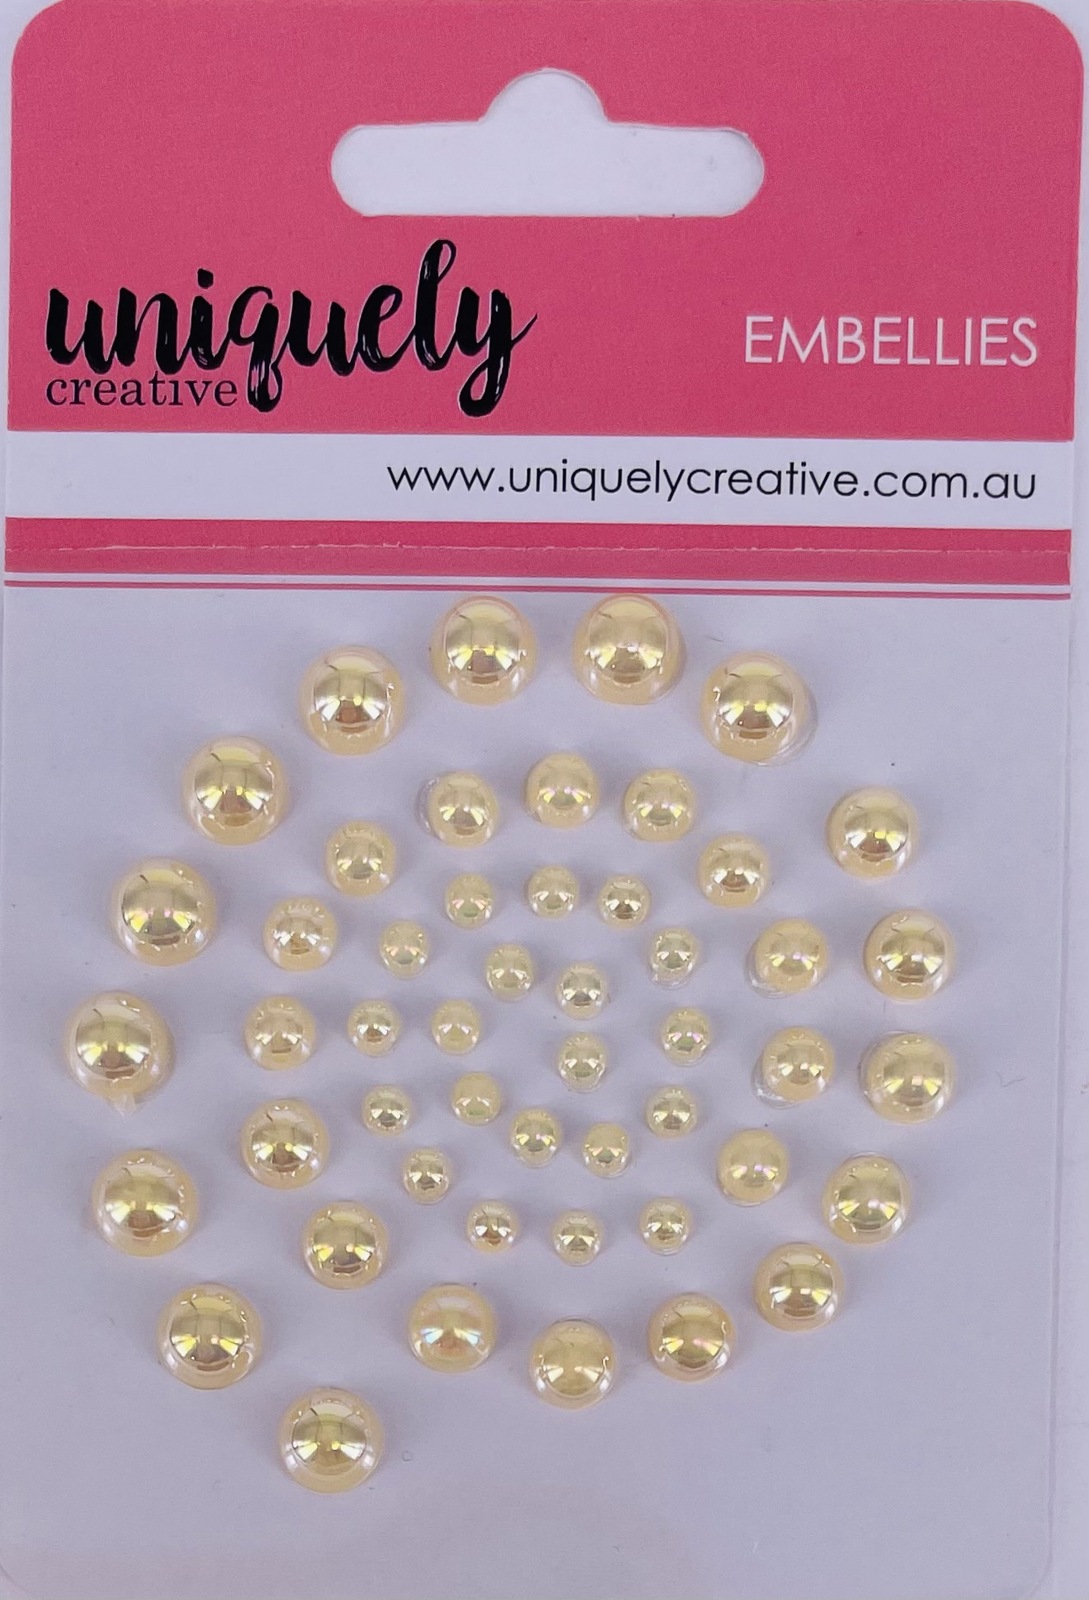 Uniquely Creative Embellishment Adhesive Champagne Pearls